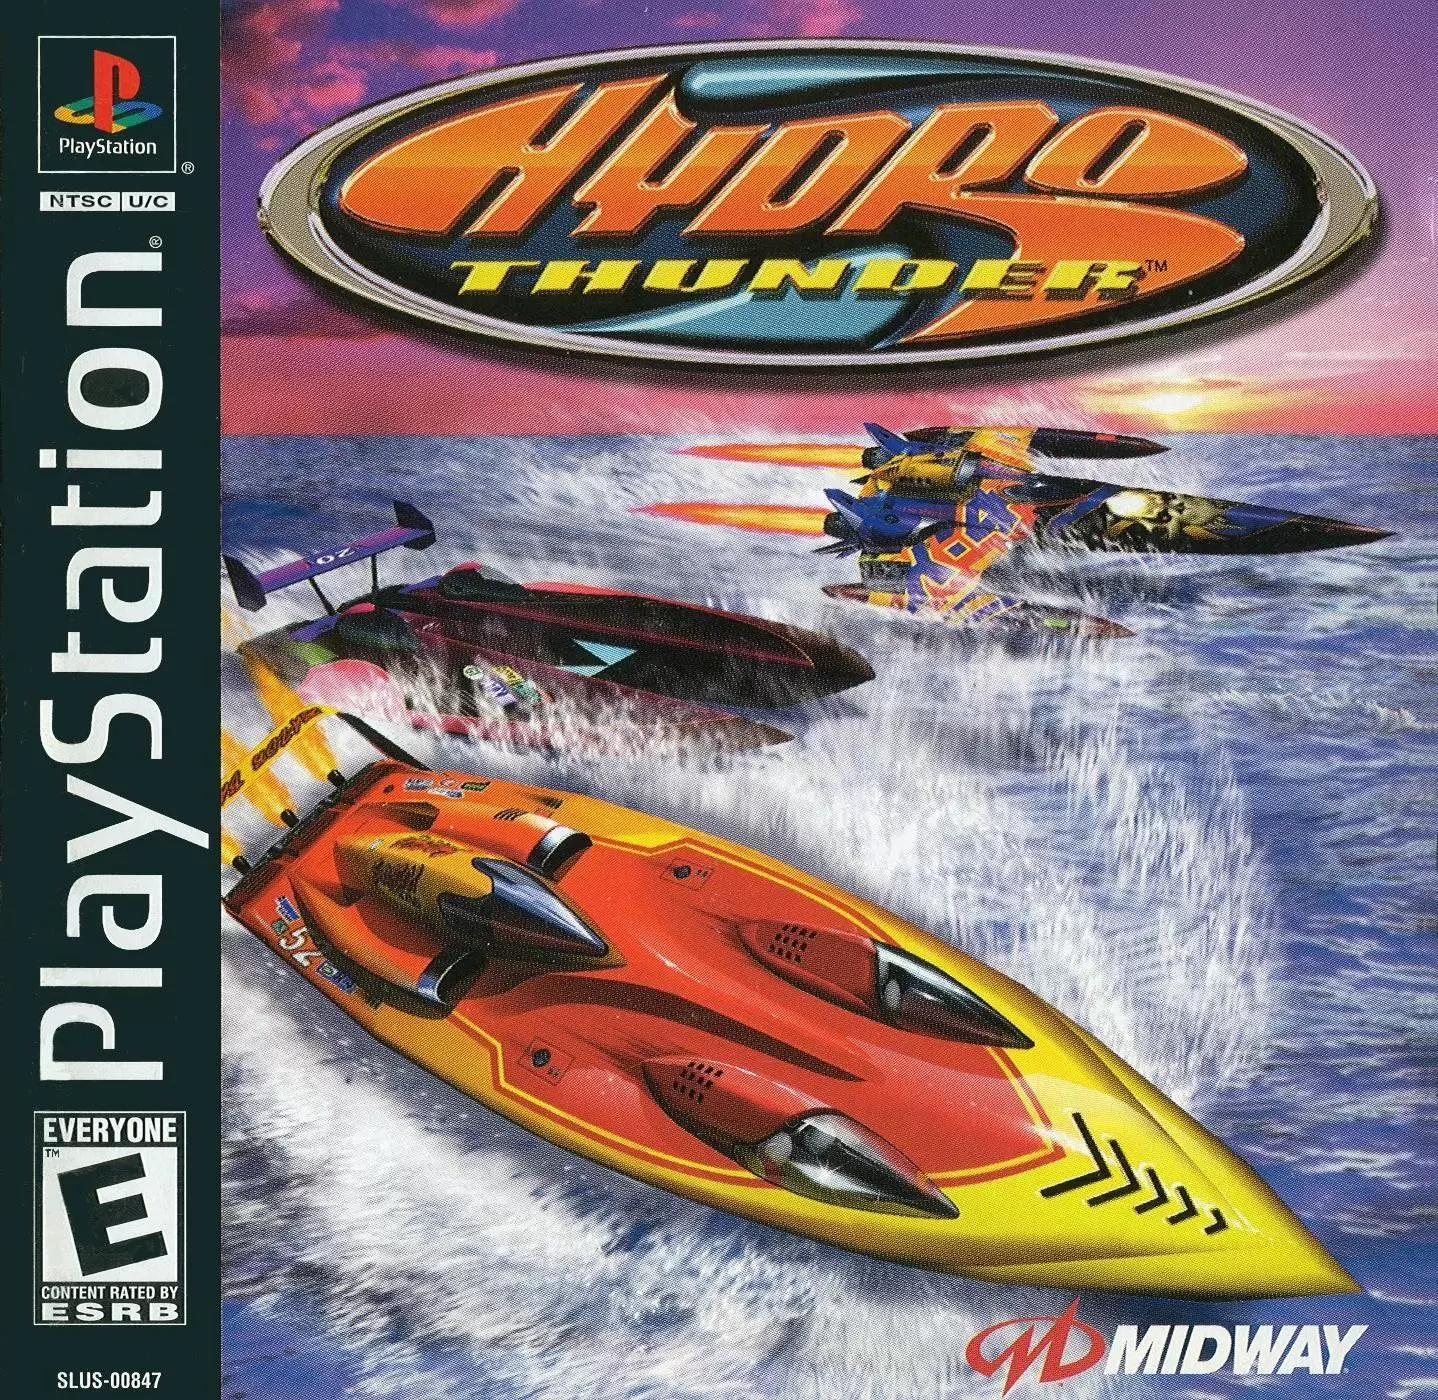 Playstation games - Hydro Thunder